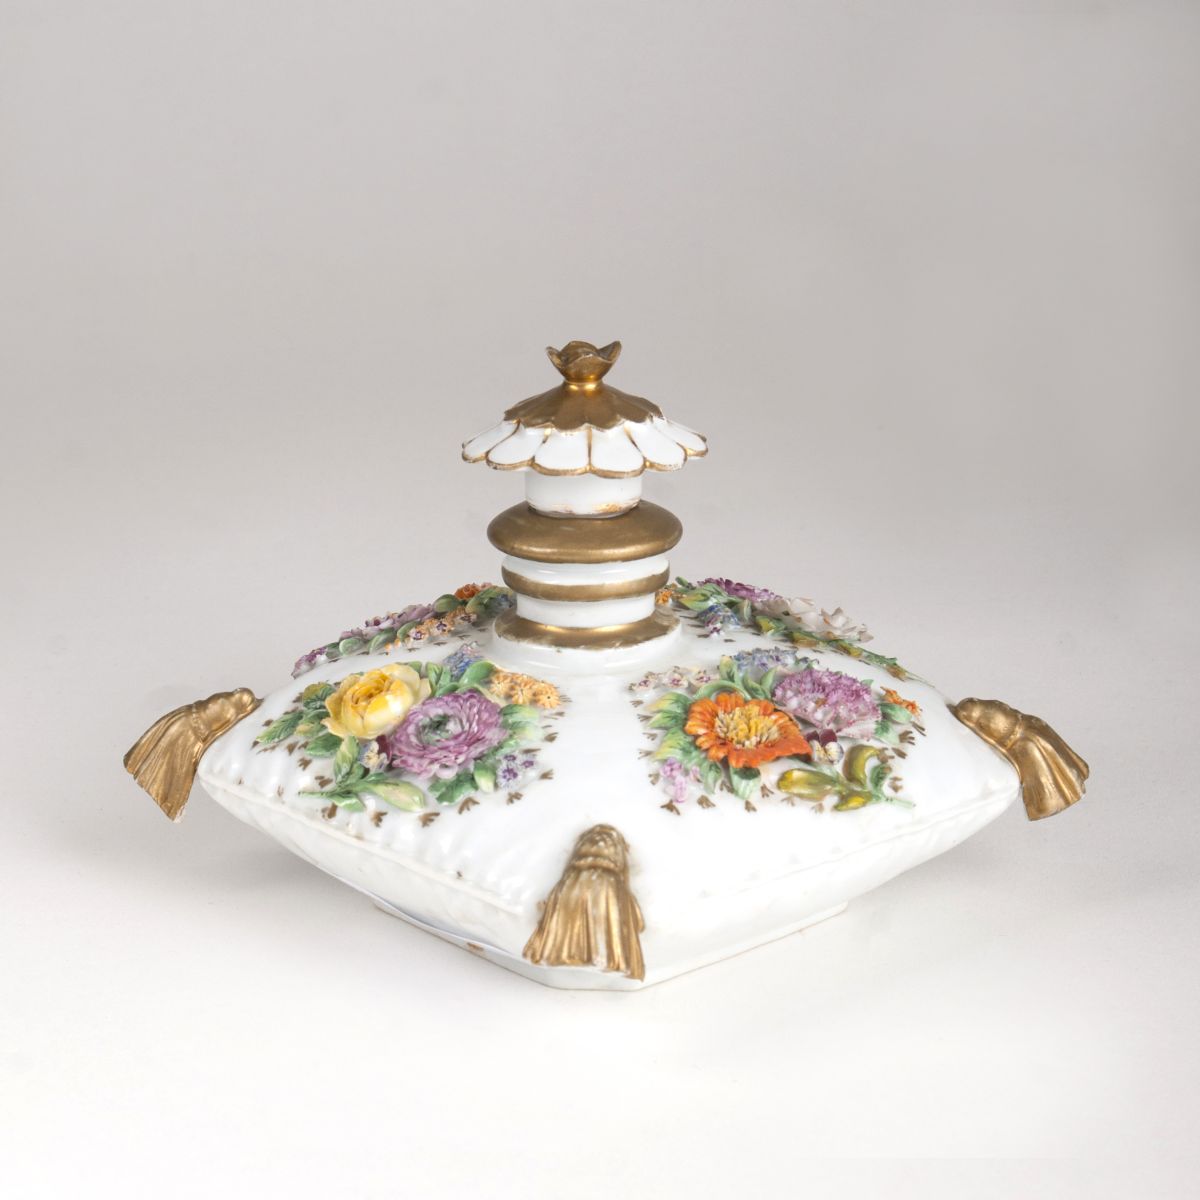 A very decorative porcelain flacon in cushion-shape